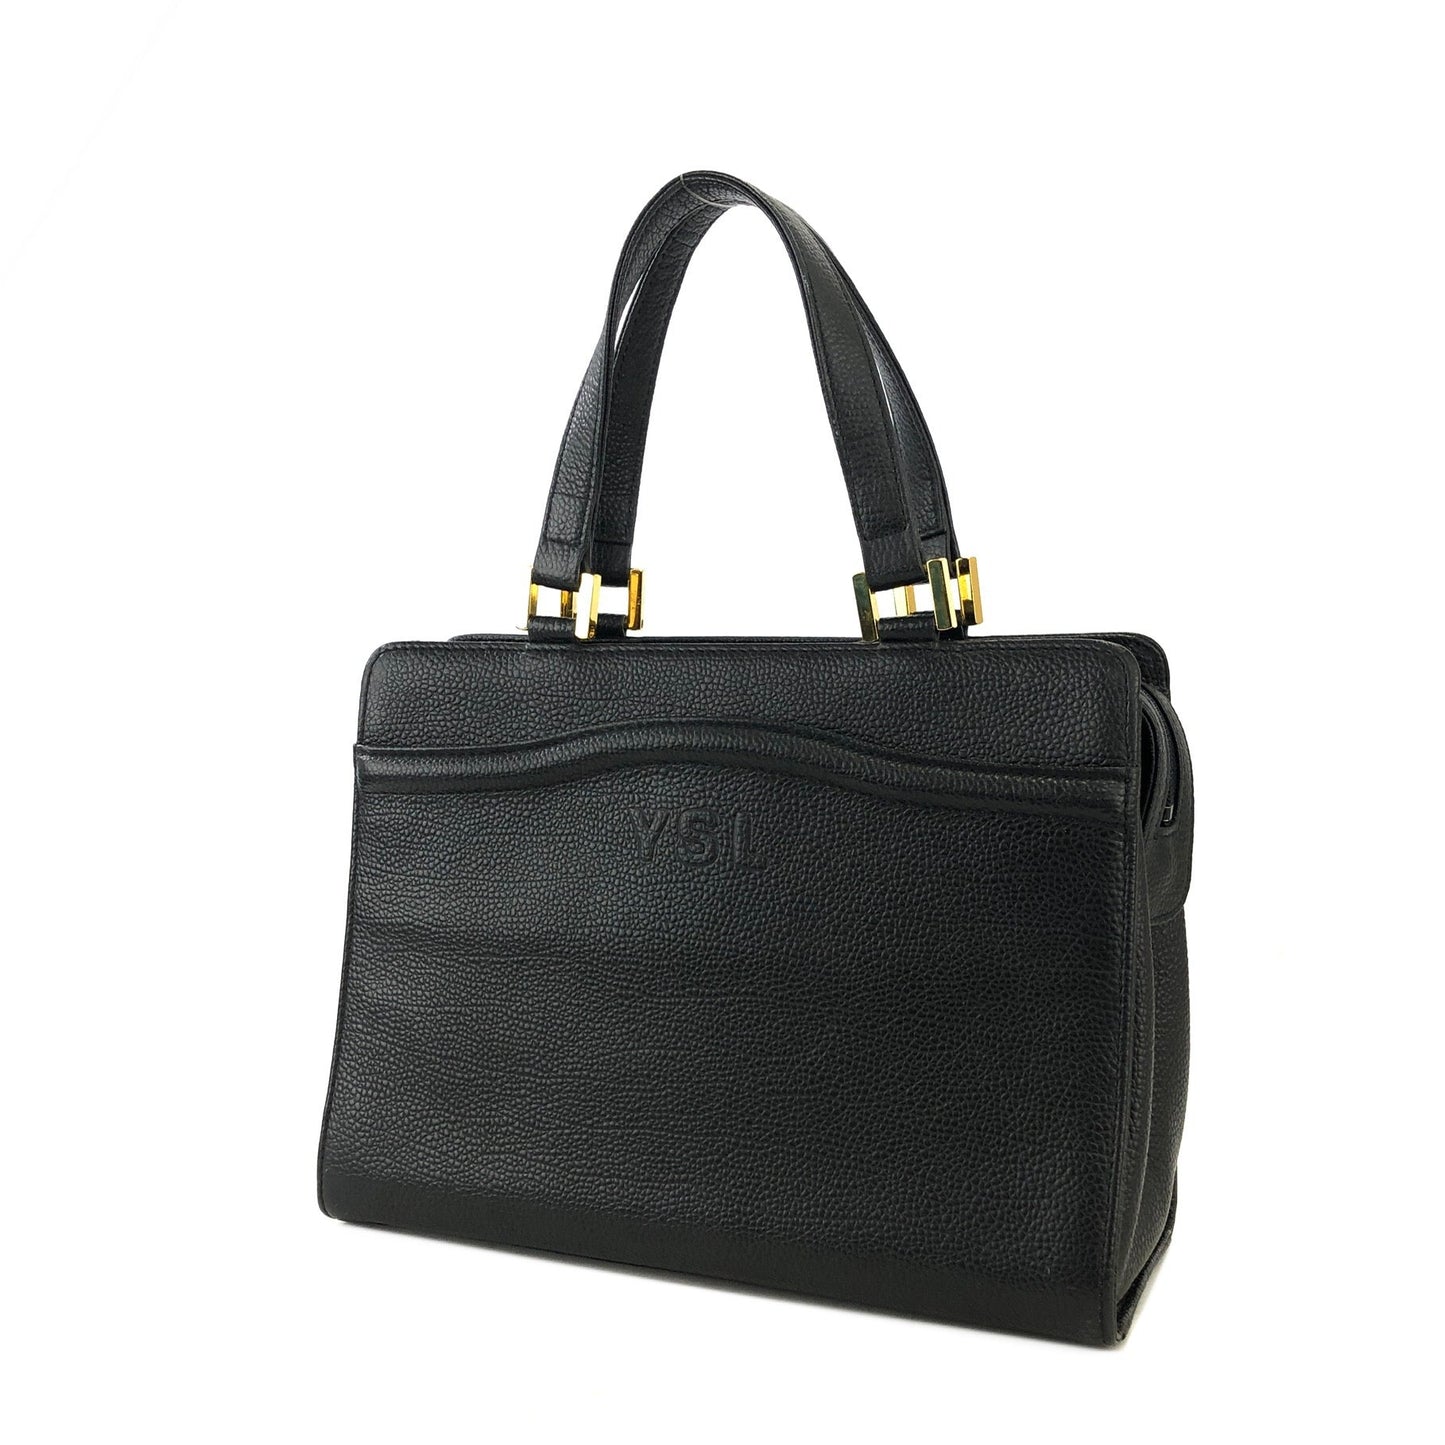 Yves Saint Laurent YSL logo Leather Handbag Black Vintage Old irukzm